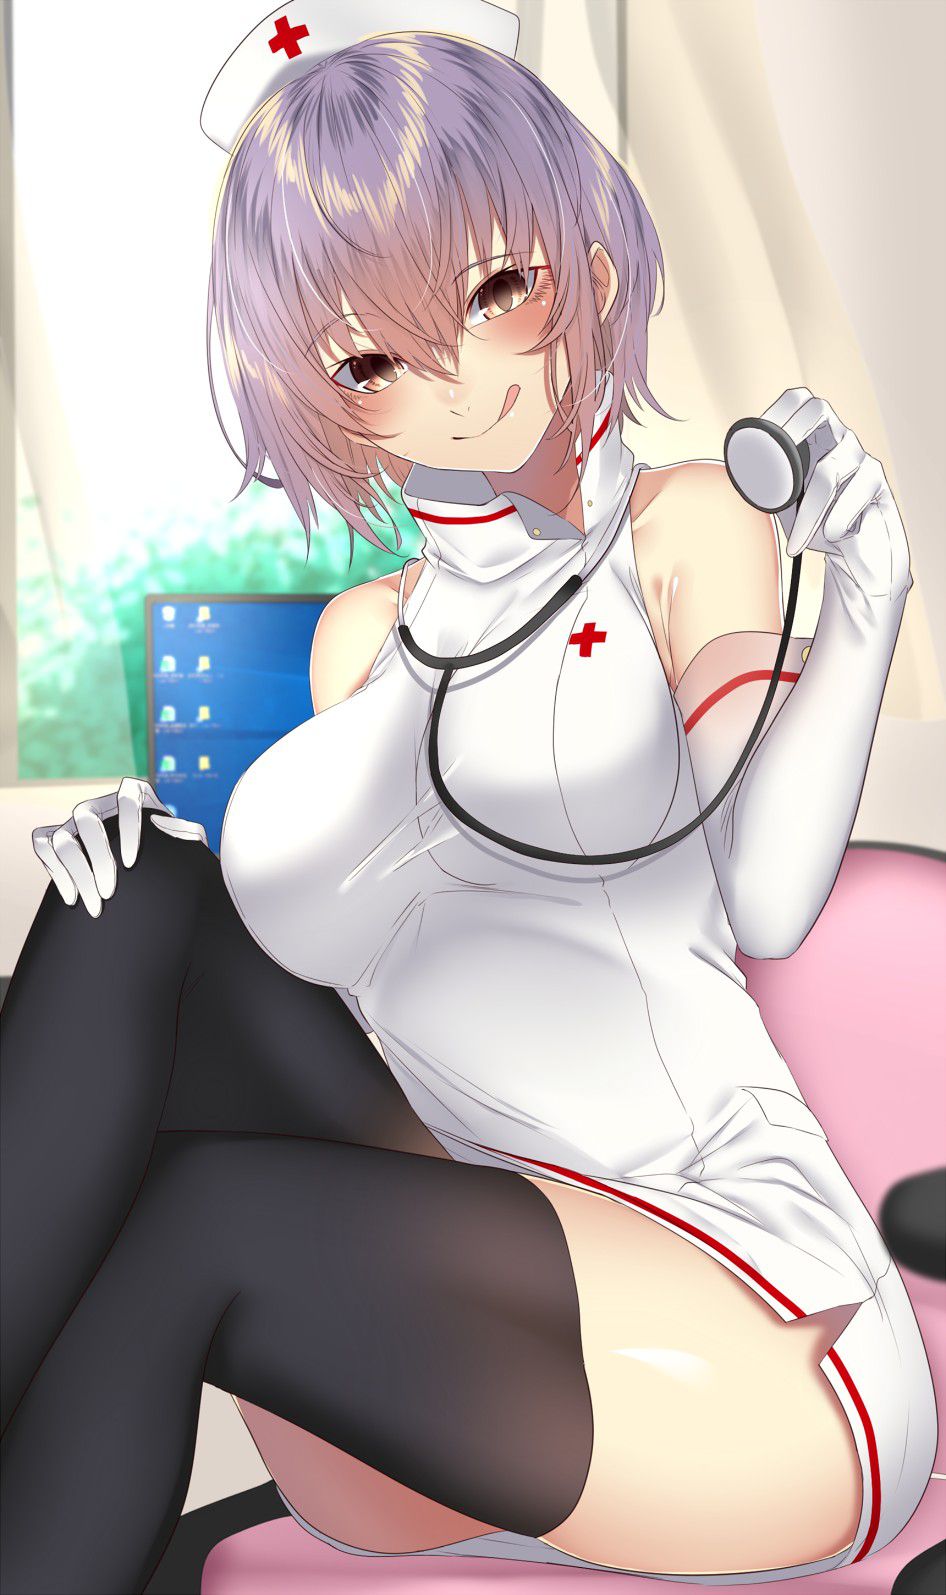 [Secondary erotic] erotic image summary of nurse who gives lewd care [50 photos] 35